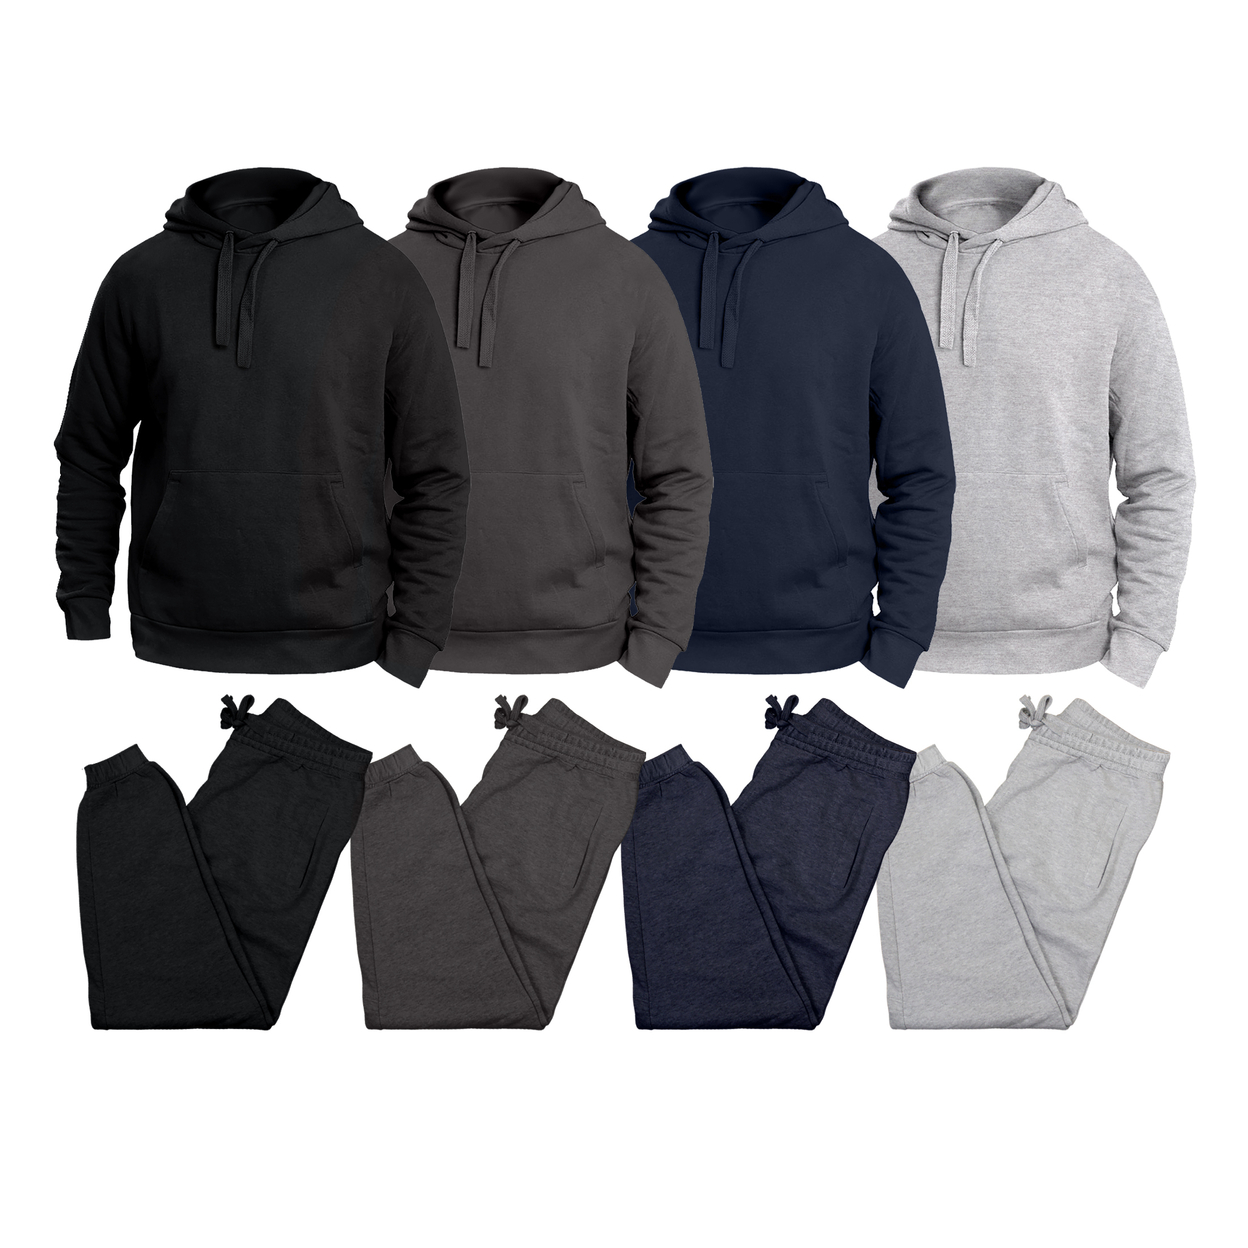 Multi-Pack: Big & Tall Men's Winter Warm Cozy Athletic Fleece Lined Multi-Pocket Cargo Sweatsuit - Black, 1-pack, Small